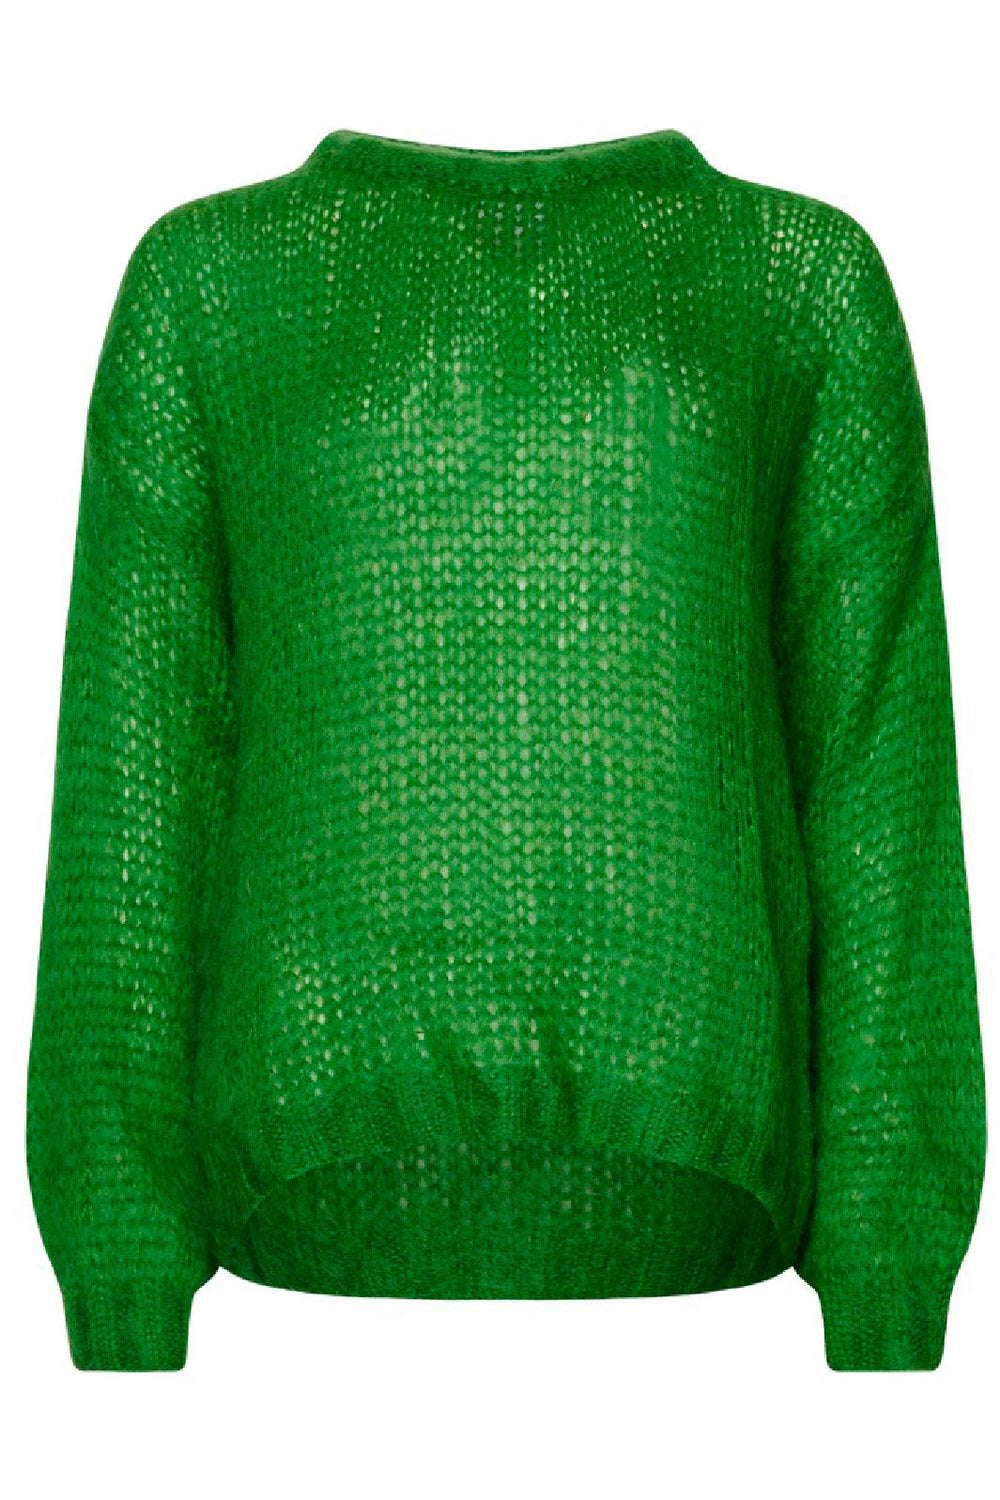 Noella - Delta Knit Sweater - Grass Green Cardigans 